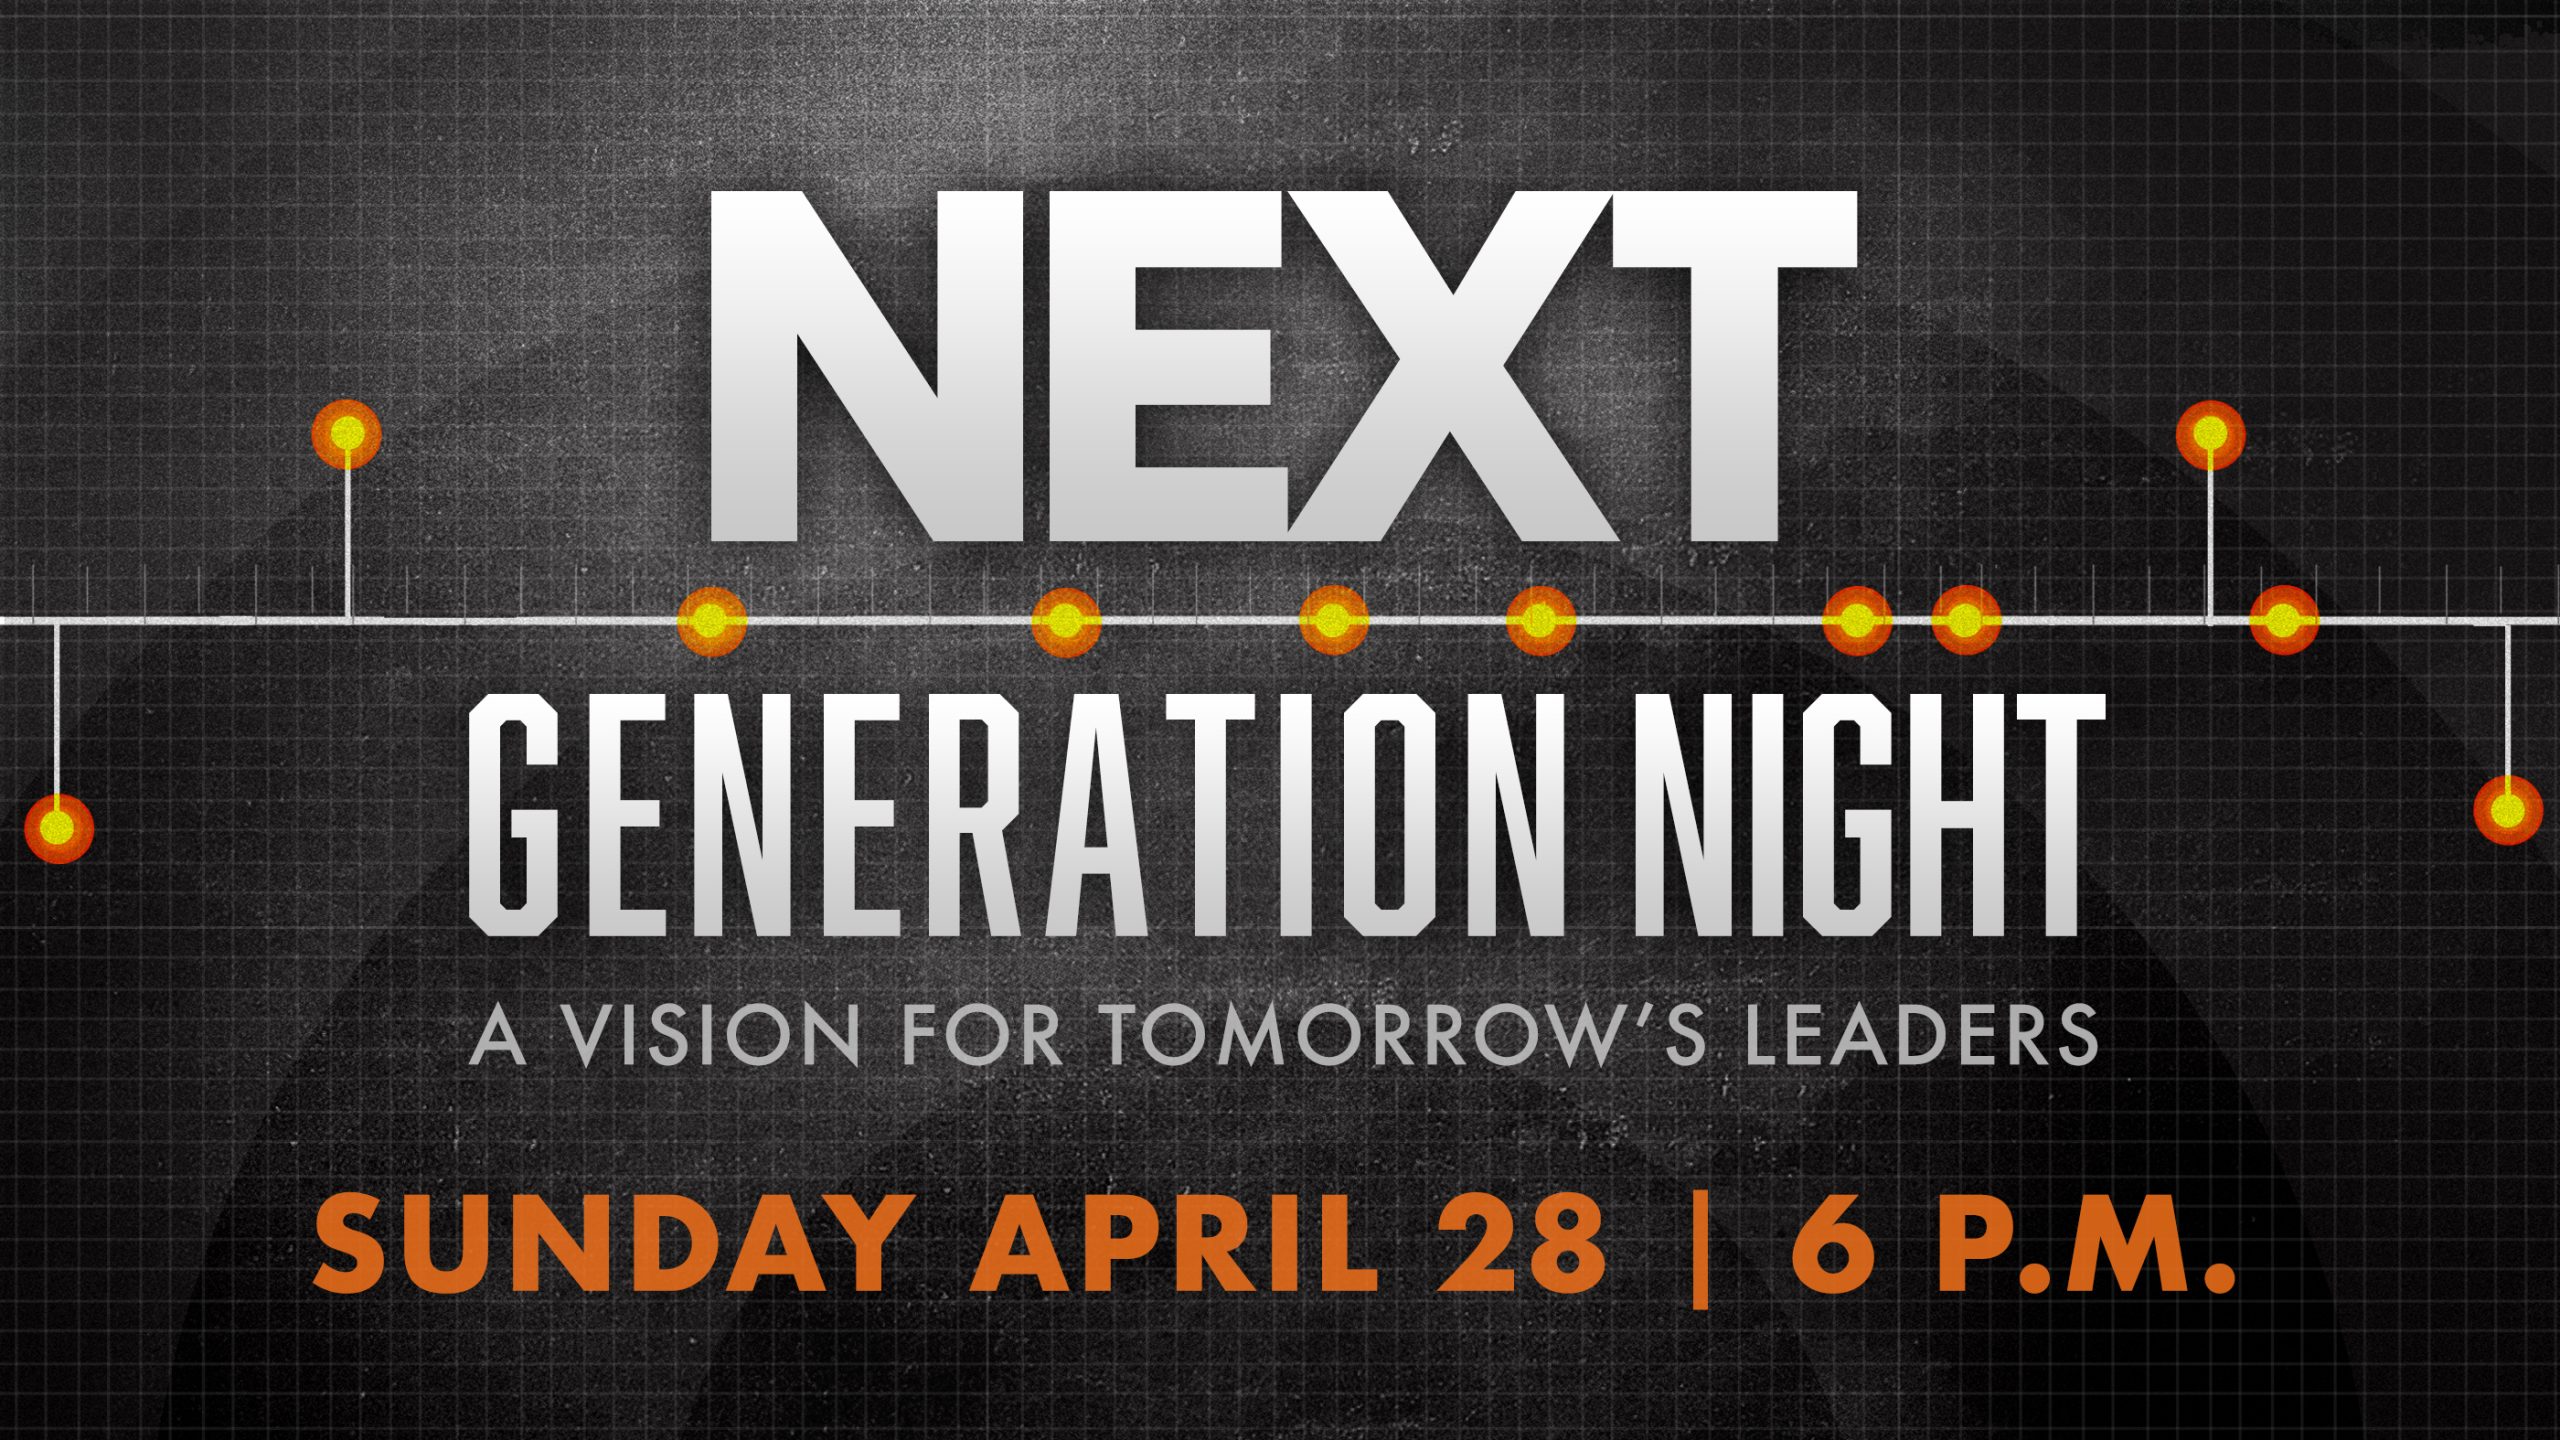 Next Generation Night, Sunday April 28, 6 p.m.